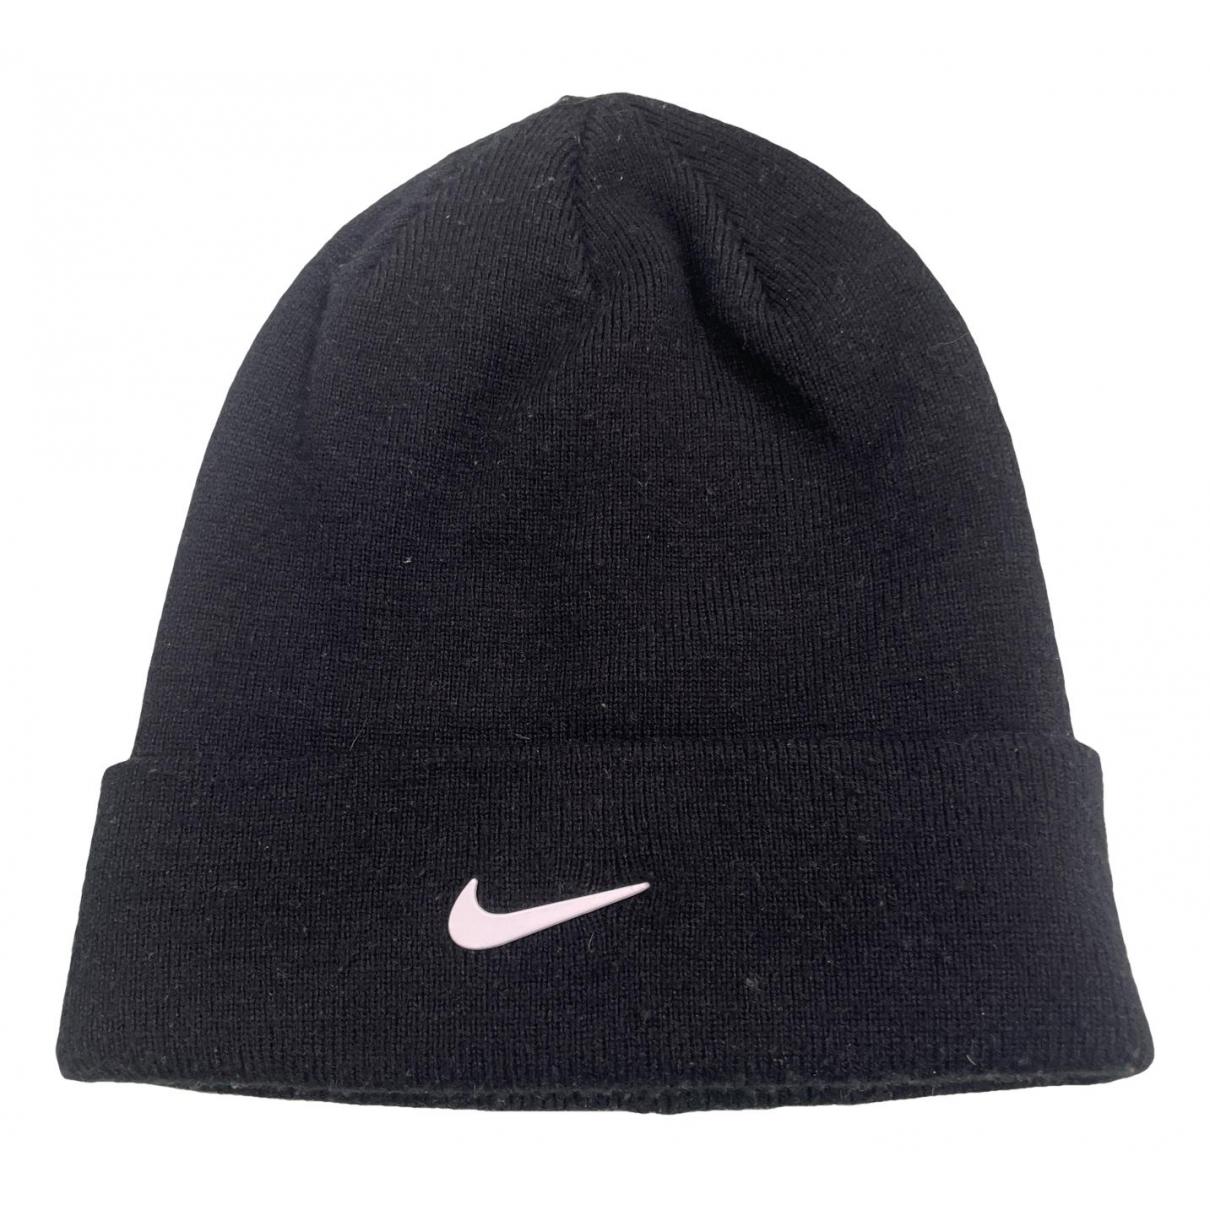 Hat Nike Black size S International in Polyester - 38118663